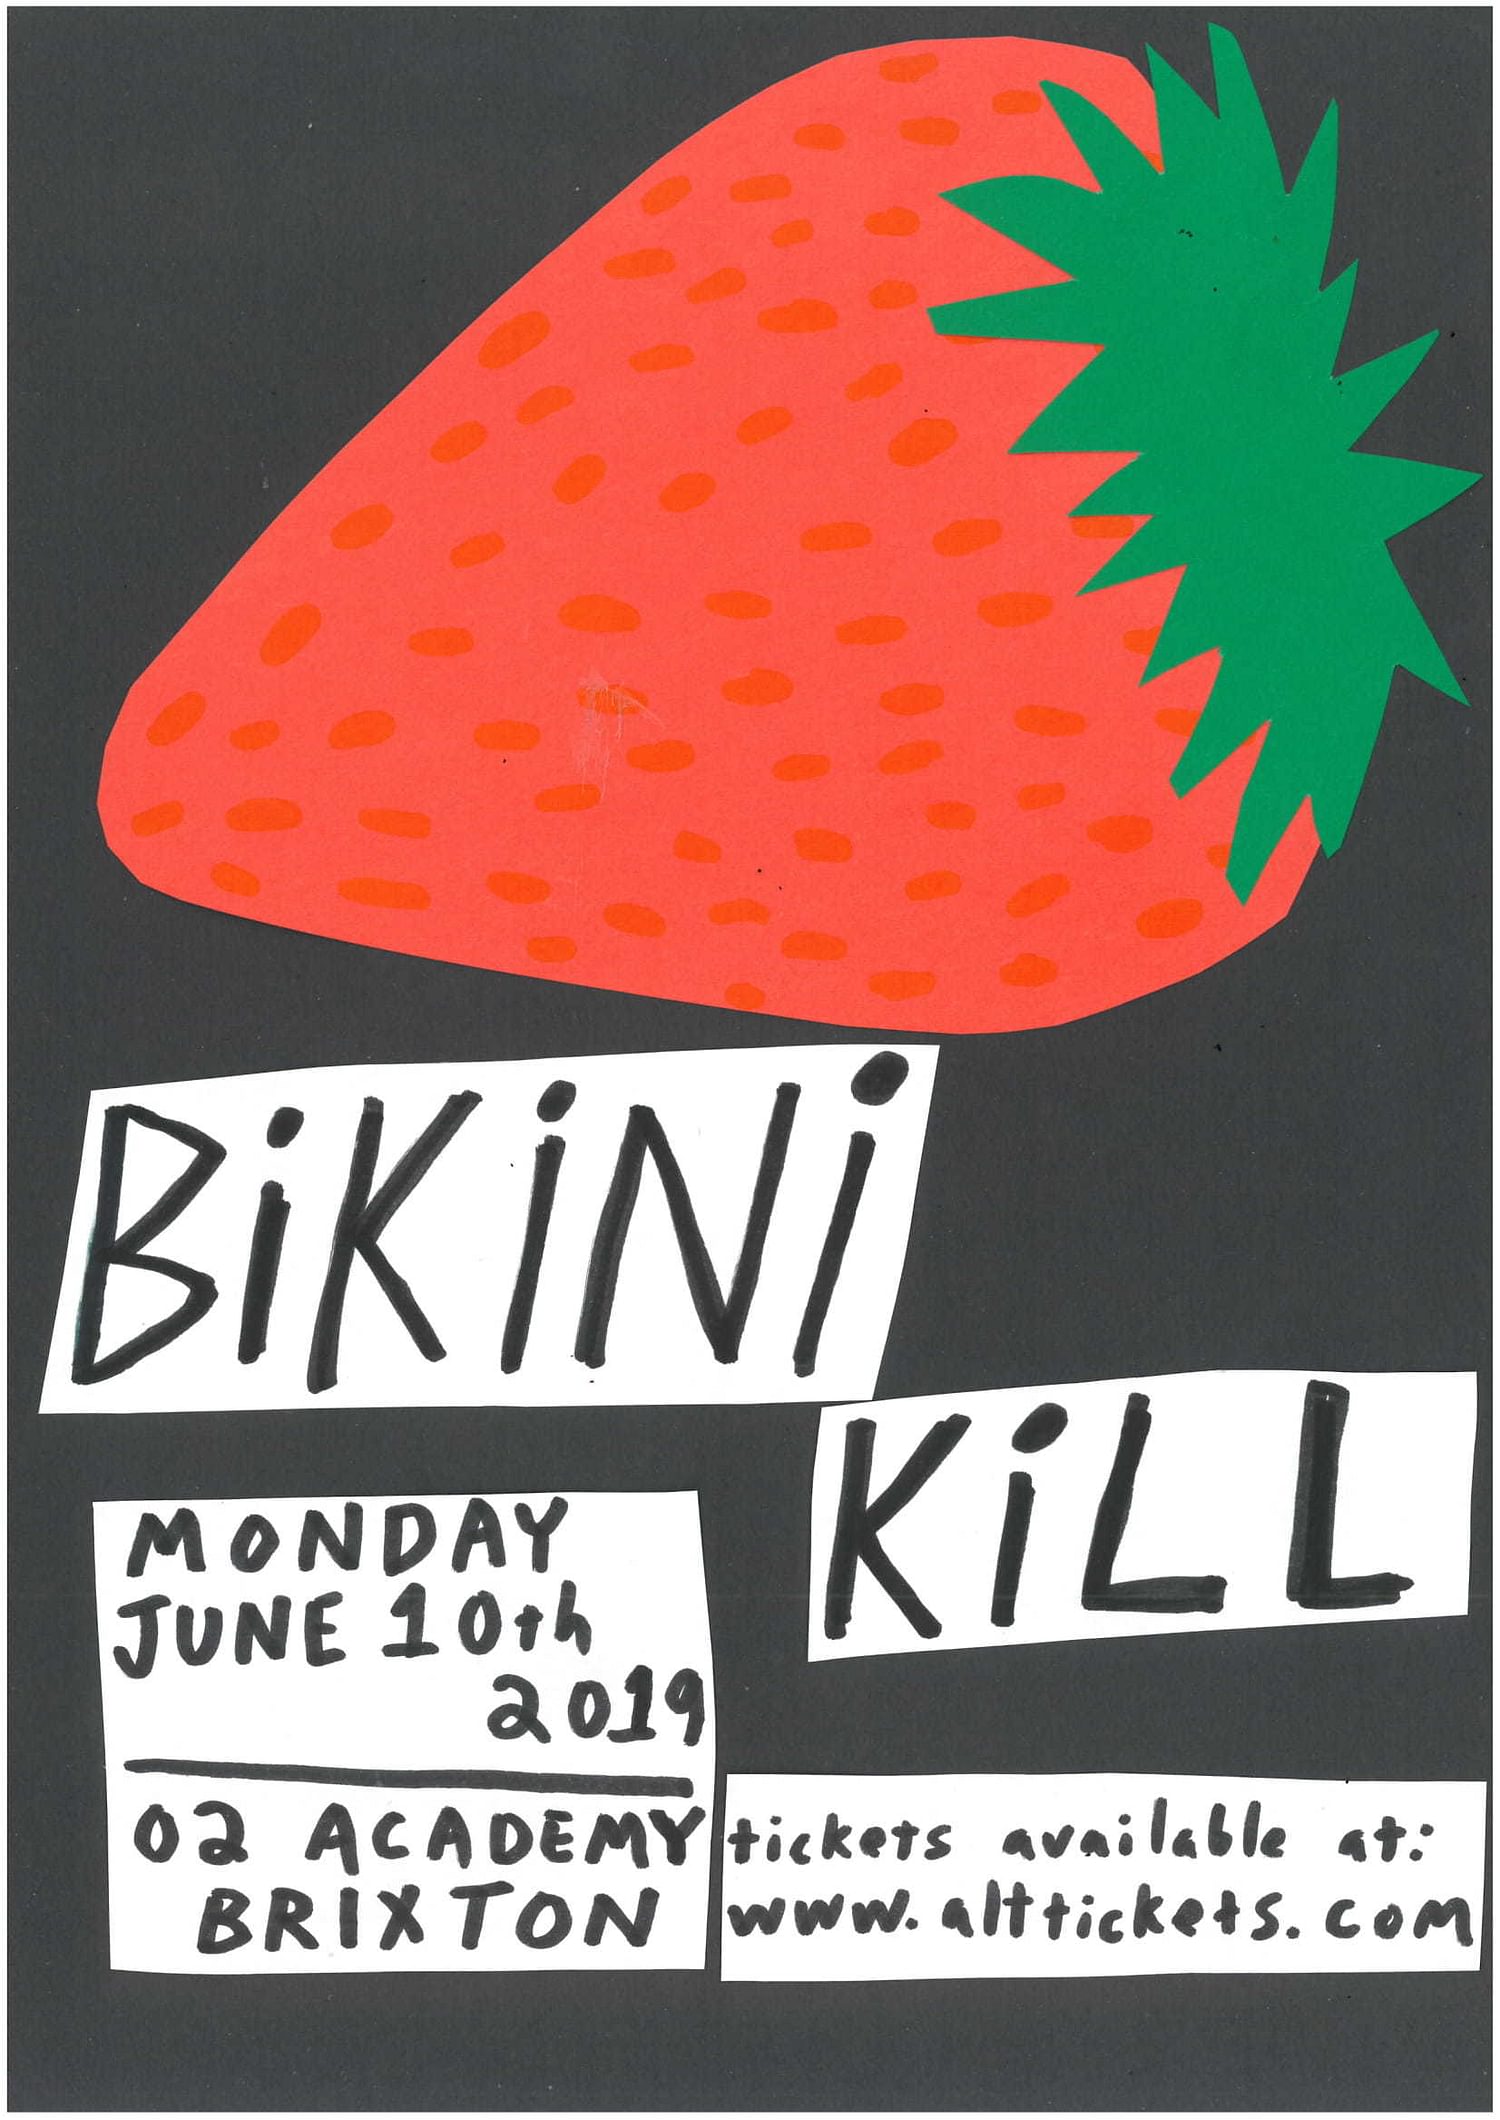 Bikini Kill announce Brixton Academy show